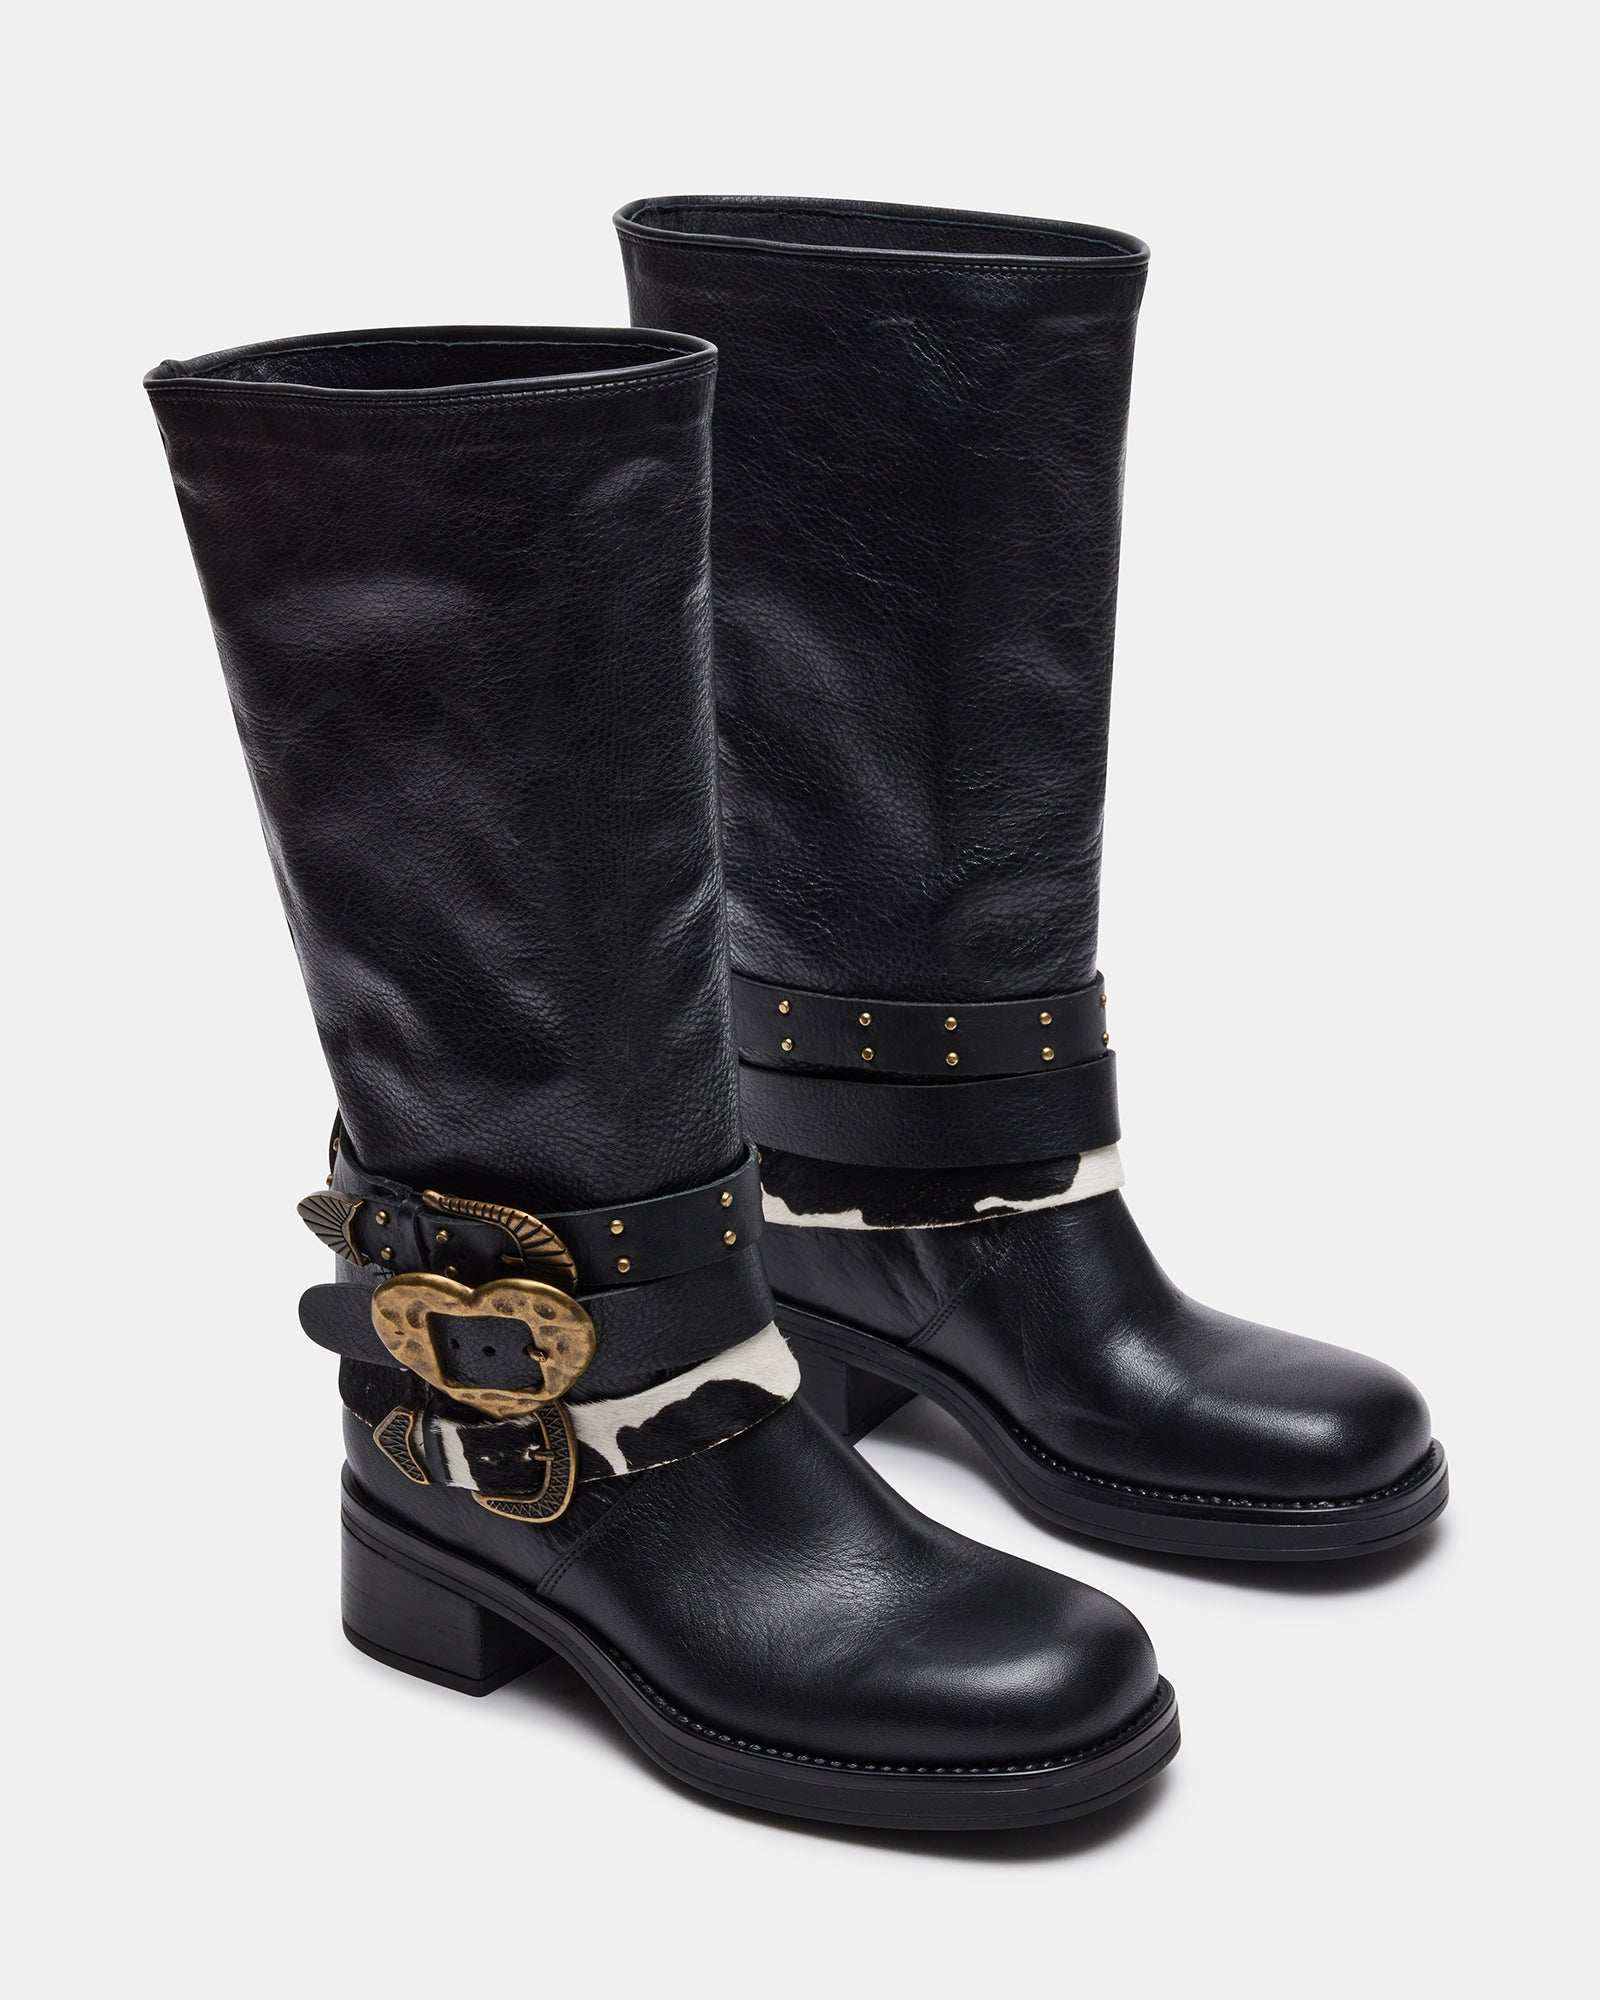 AXANDRA Black Leather Knee High Boot | Women's Boots – Steve Madden